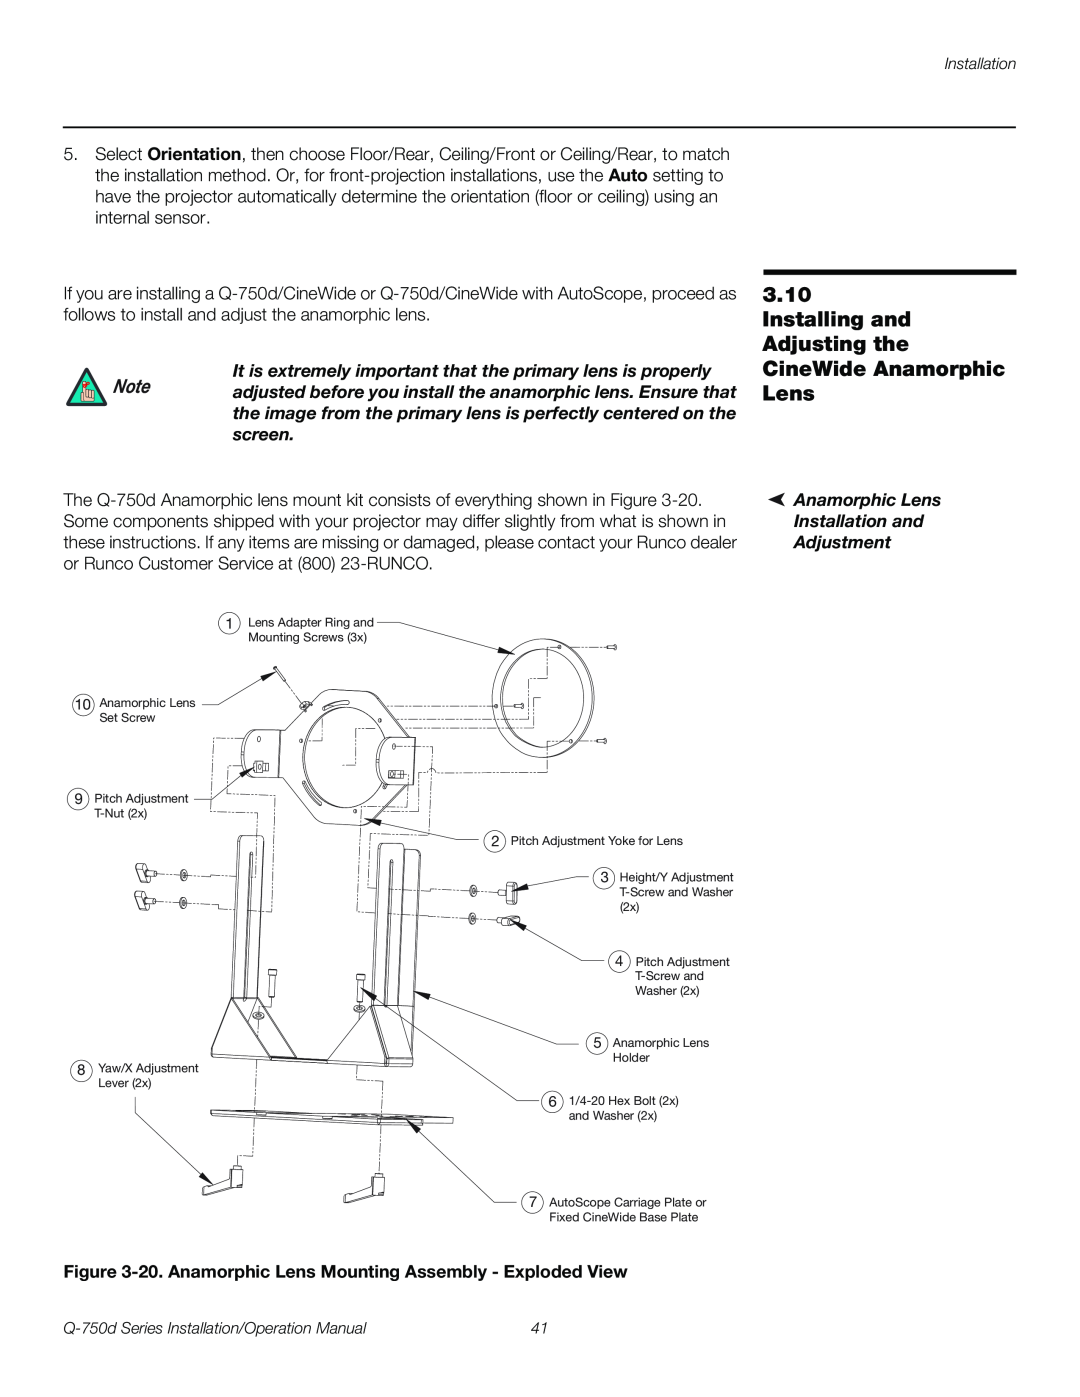 Runco Q-750D operation manual Anamorphic Lens Installation and Adjustment 